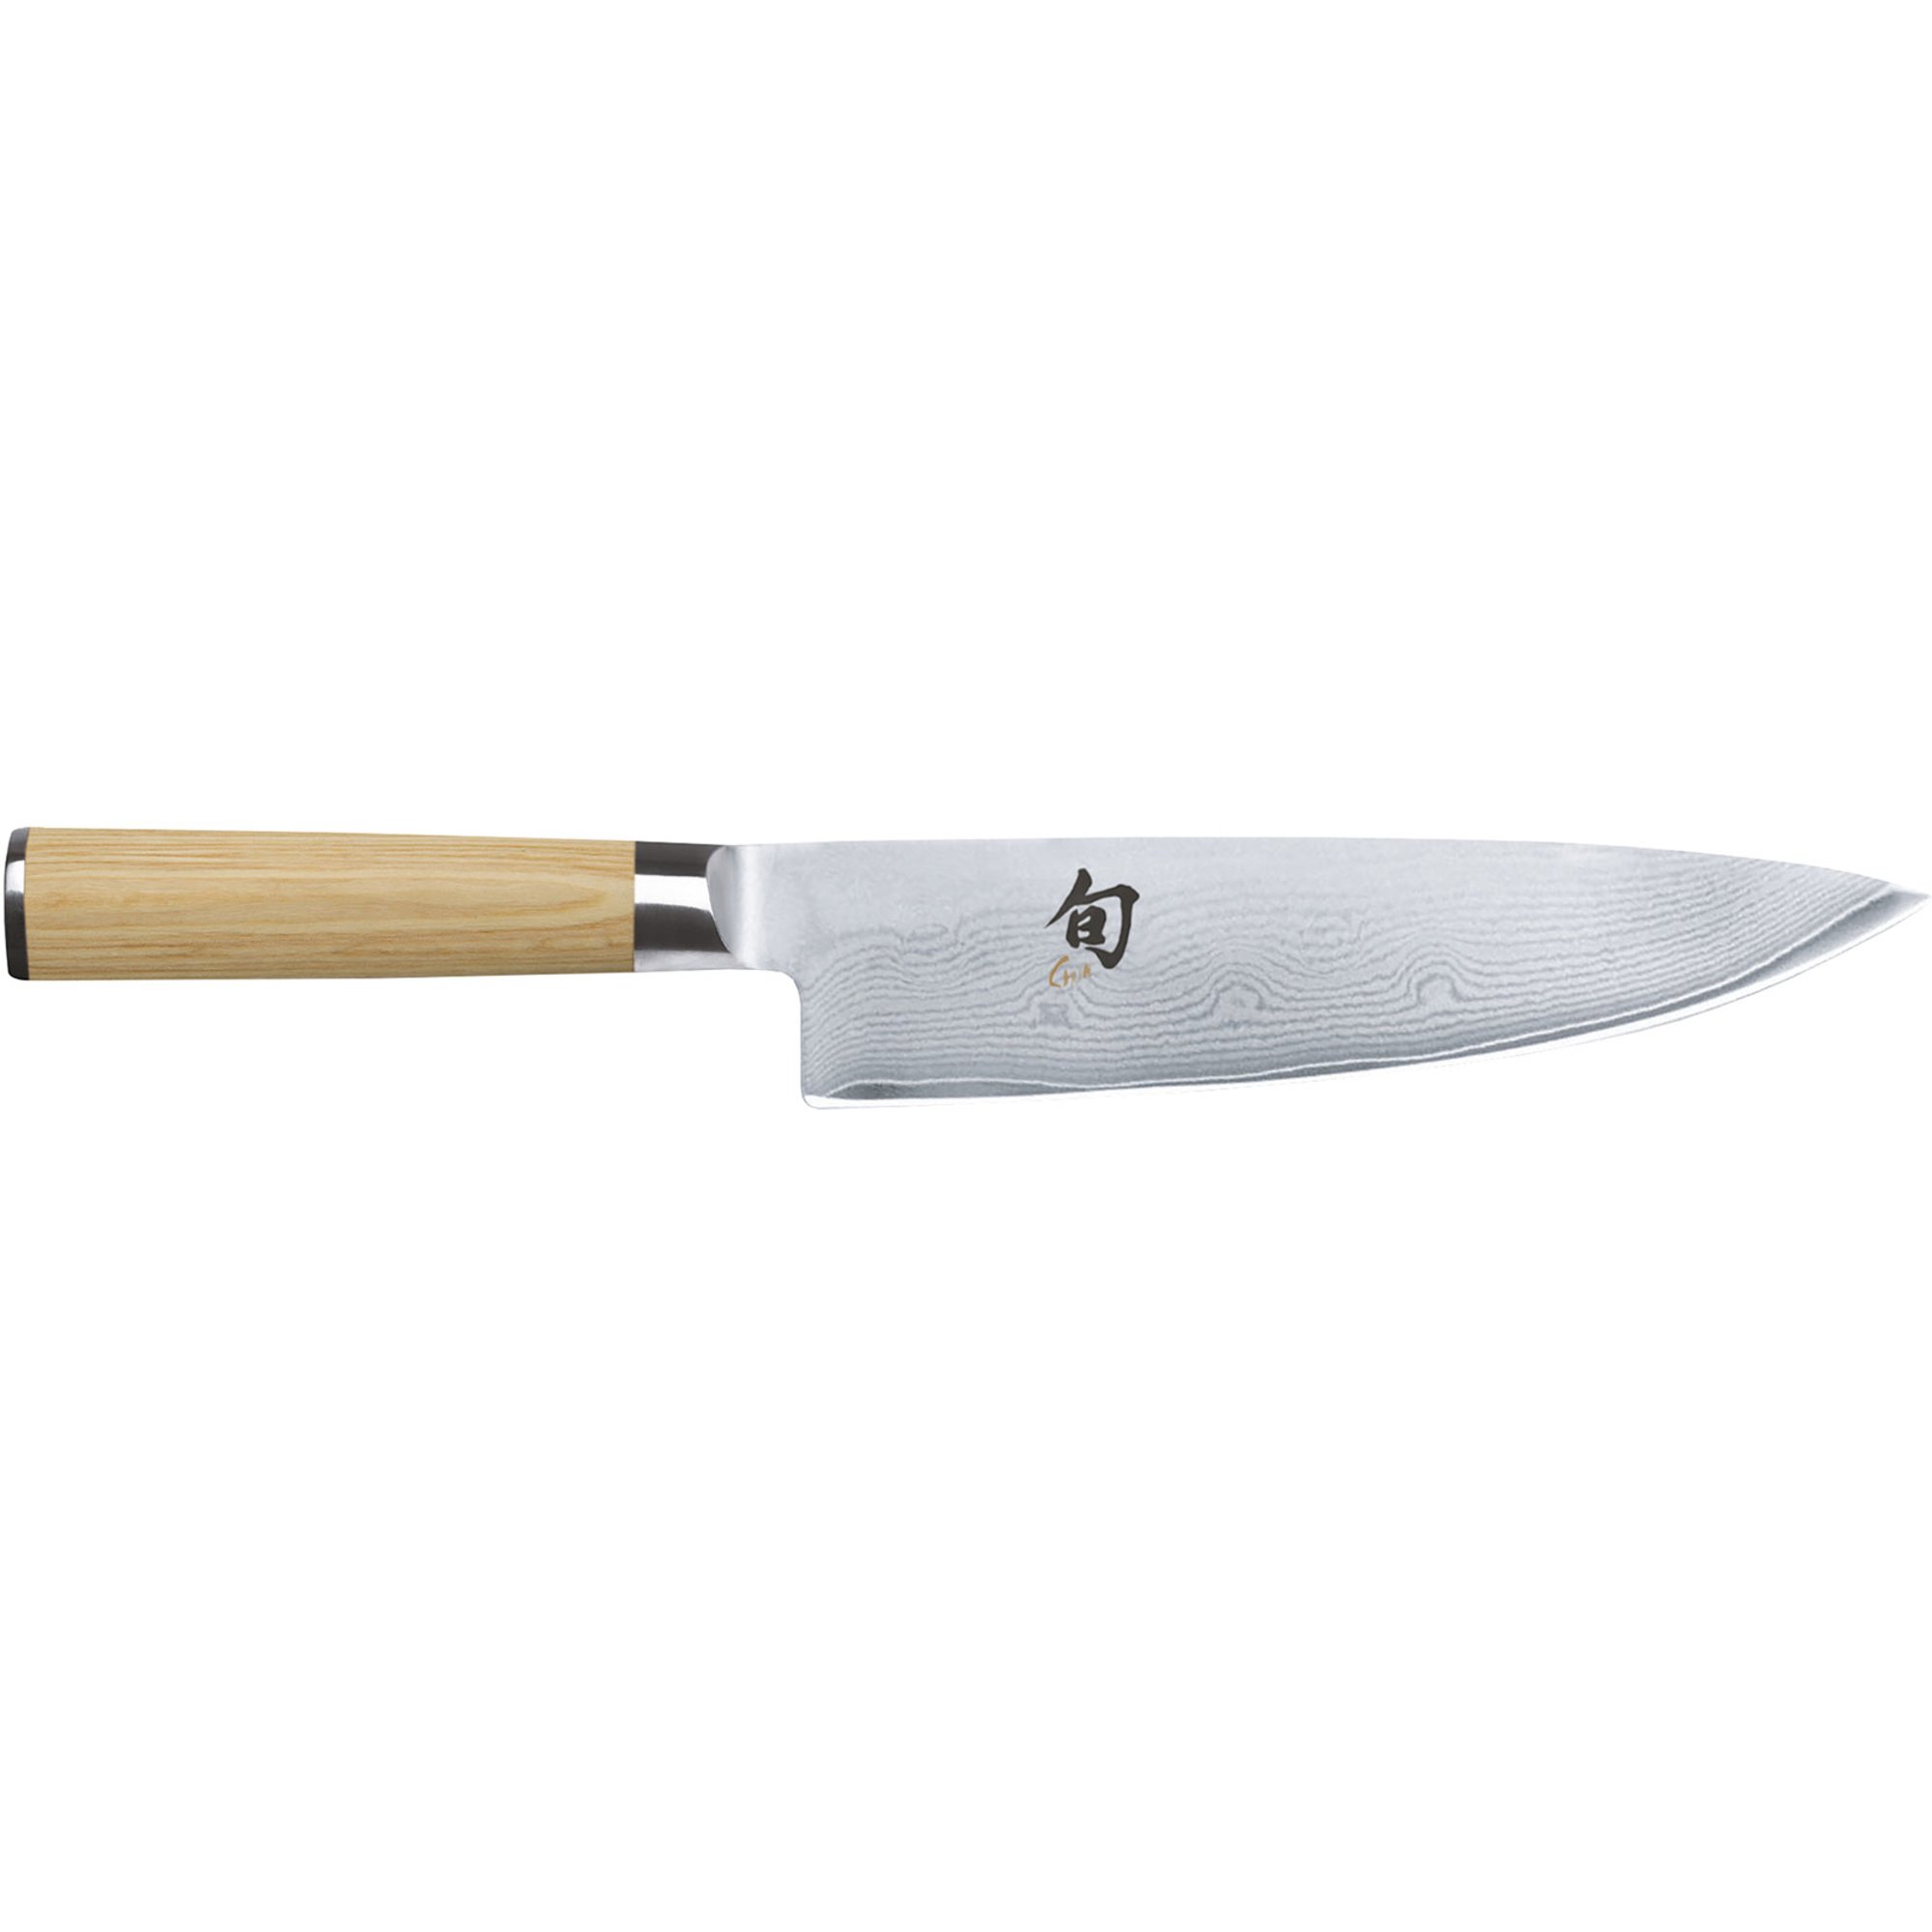 Kai Shun Classic White kockkniv 20,5 cm